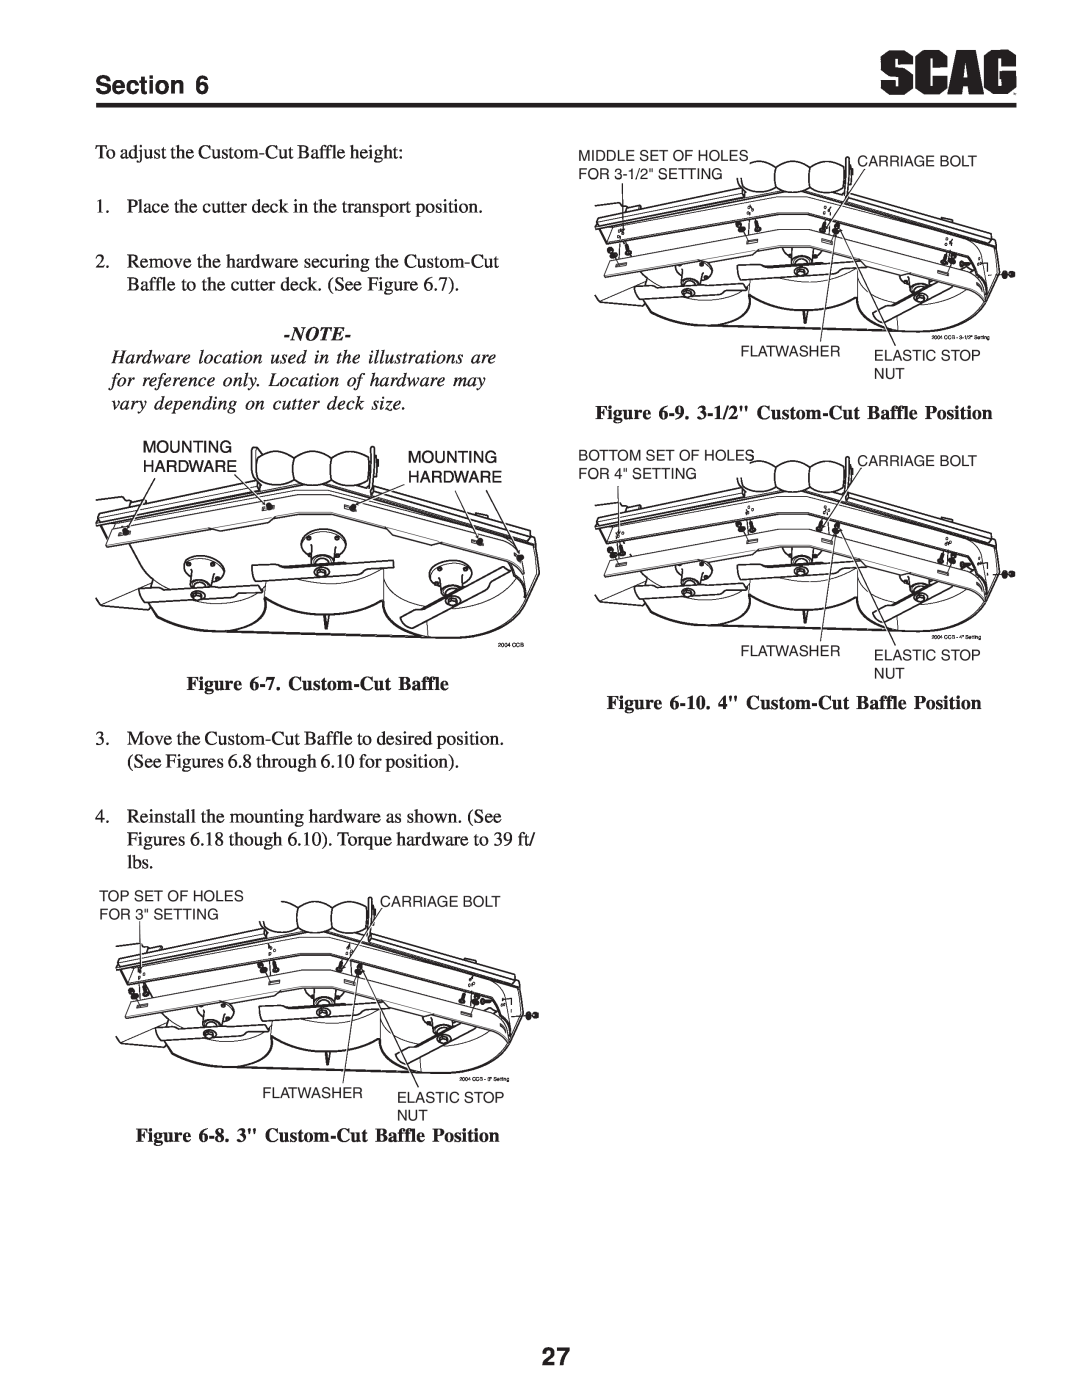 Scag Power Equipment SZC manual 7. Custom-Cut Baffle, 9. 3-1/2 Custom-Cut Baffle Position, 10. 4 Custom-Cut Baffle Position 